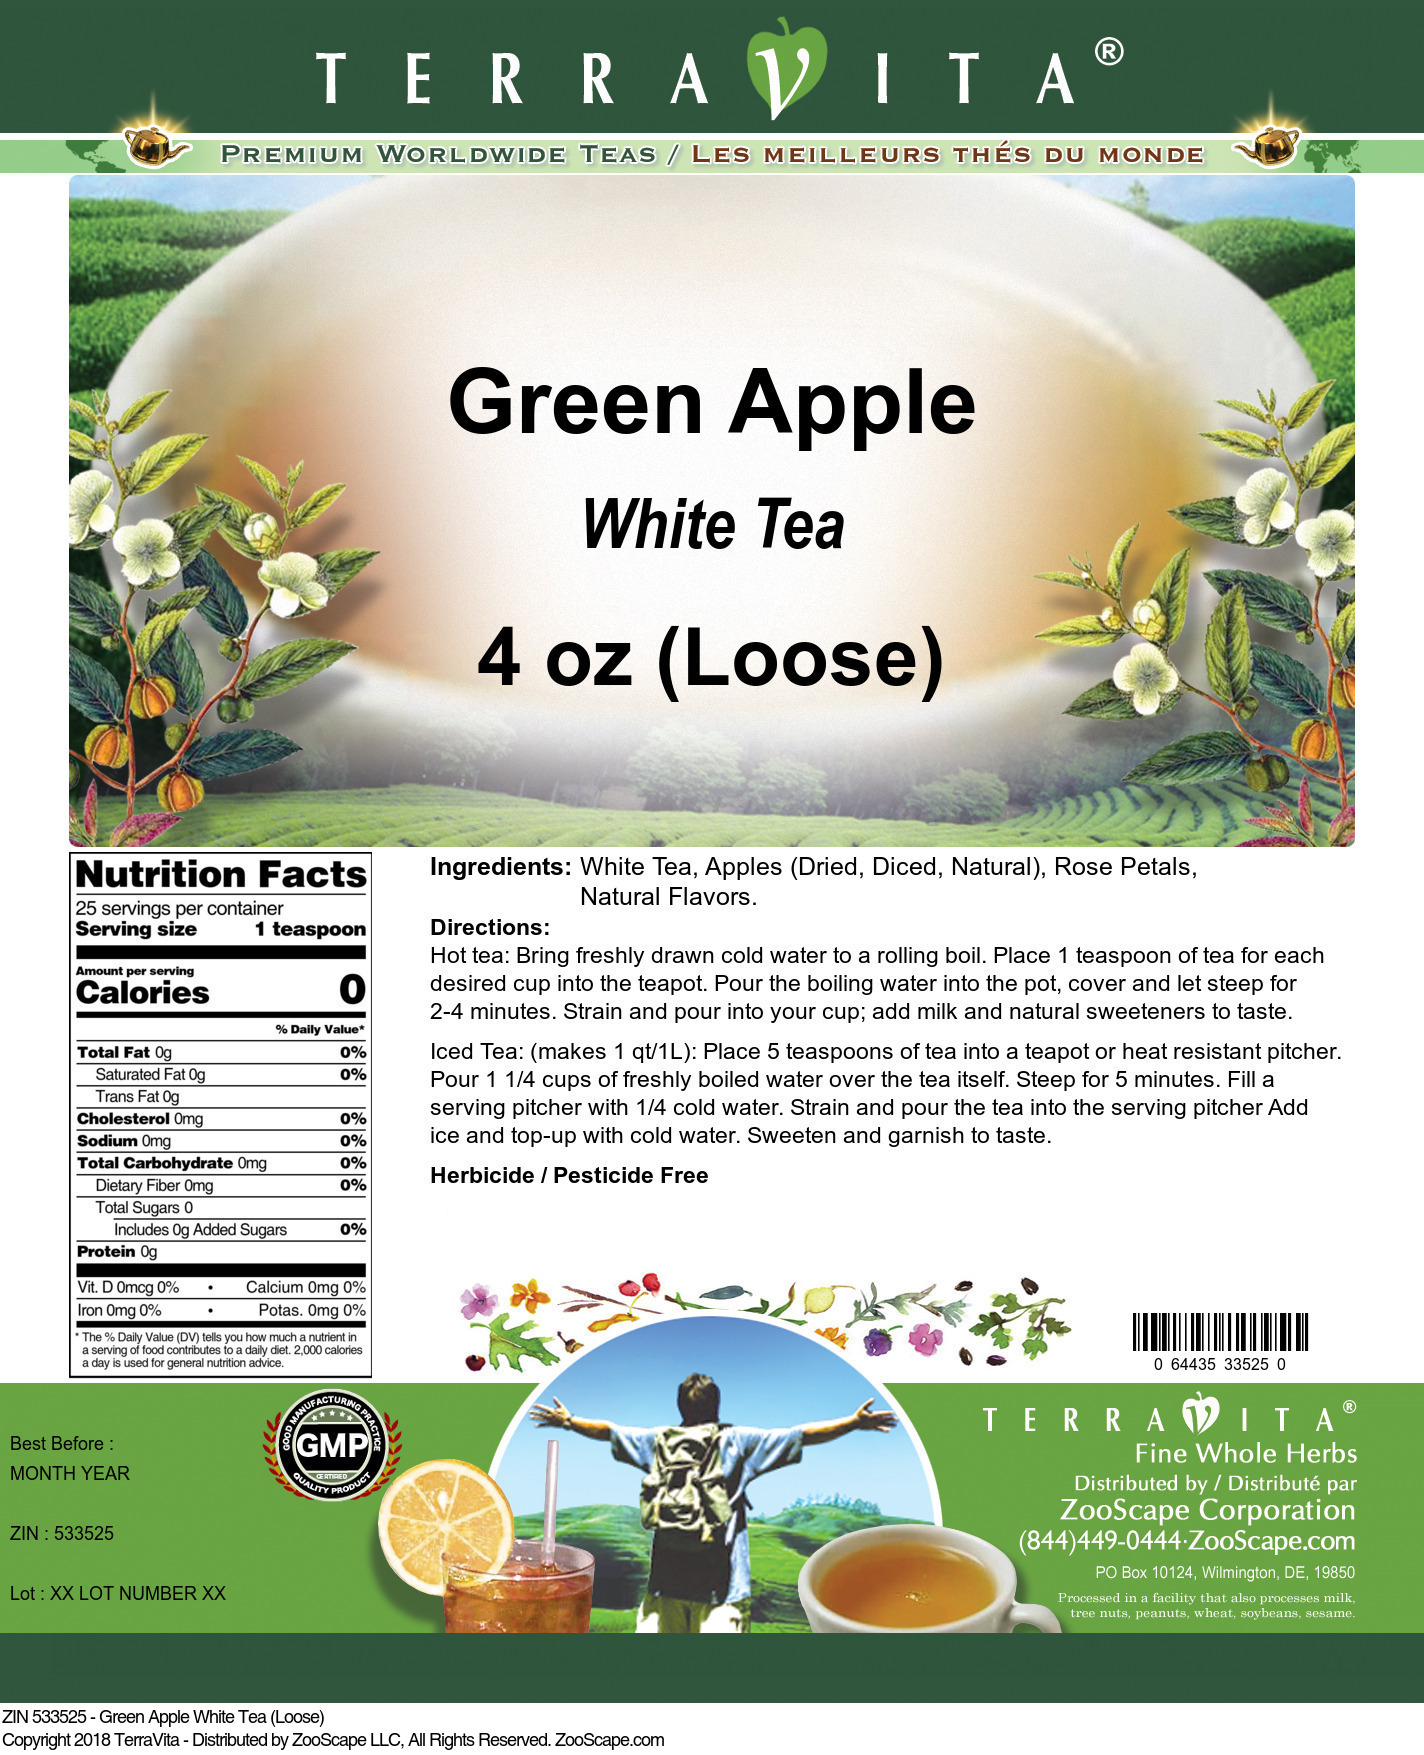 Green Apple White Tea (Loose) - Label